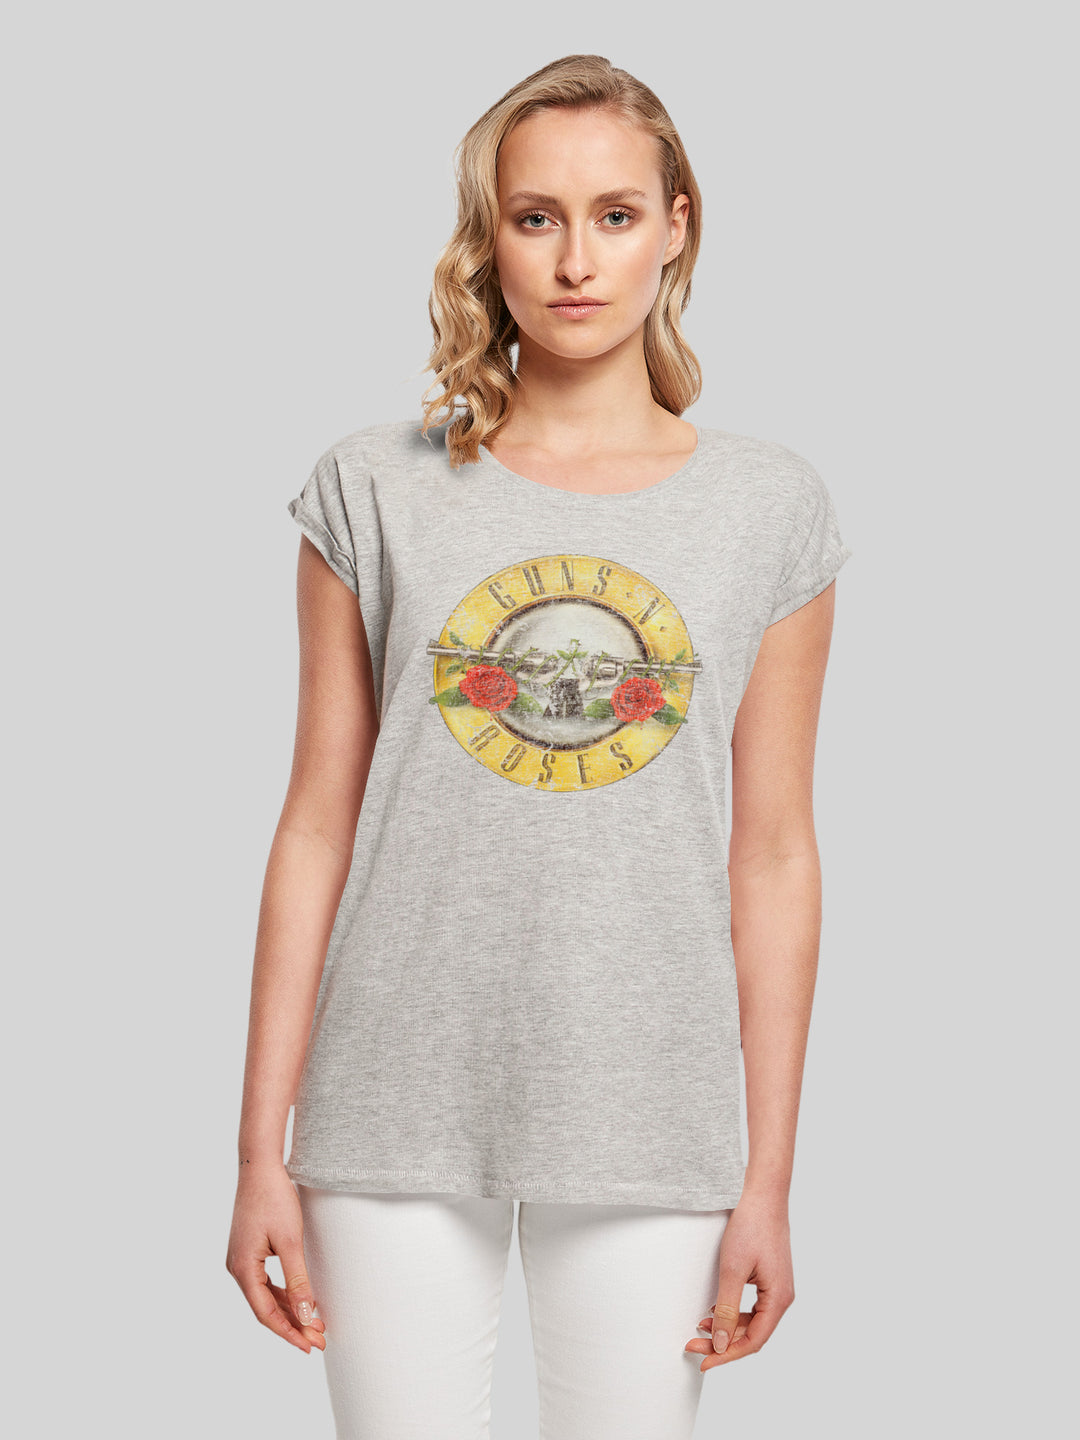 Guns 'n' Roses T-Shirt | Vintage Classic Logo | Premium Short Sleeve Ladies Tee